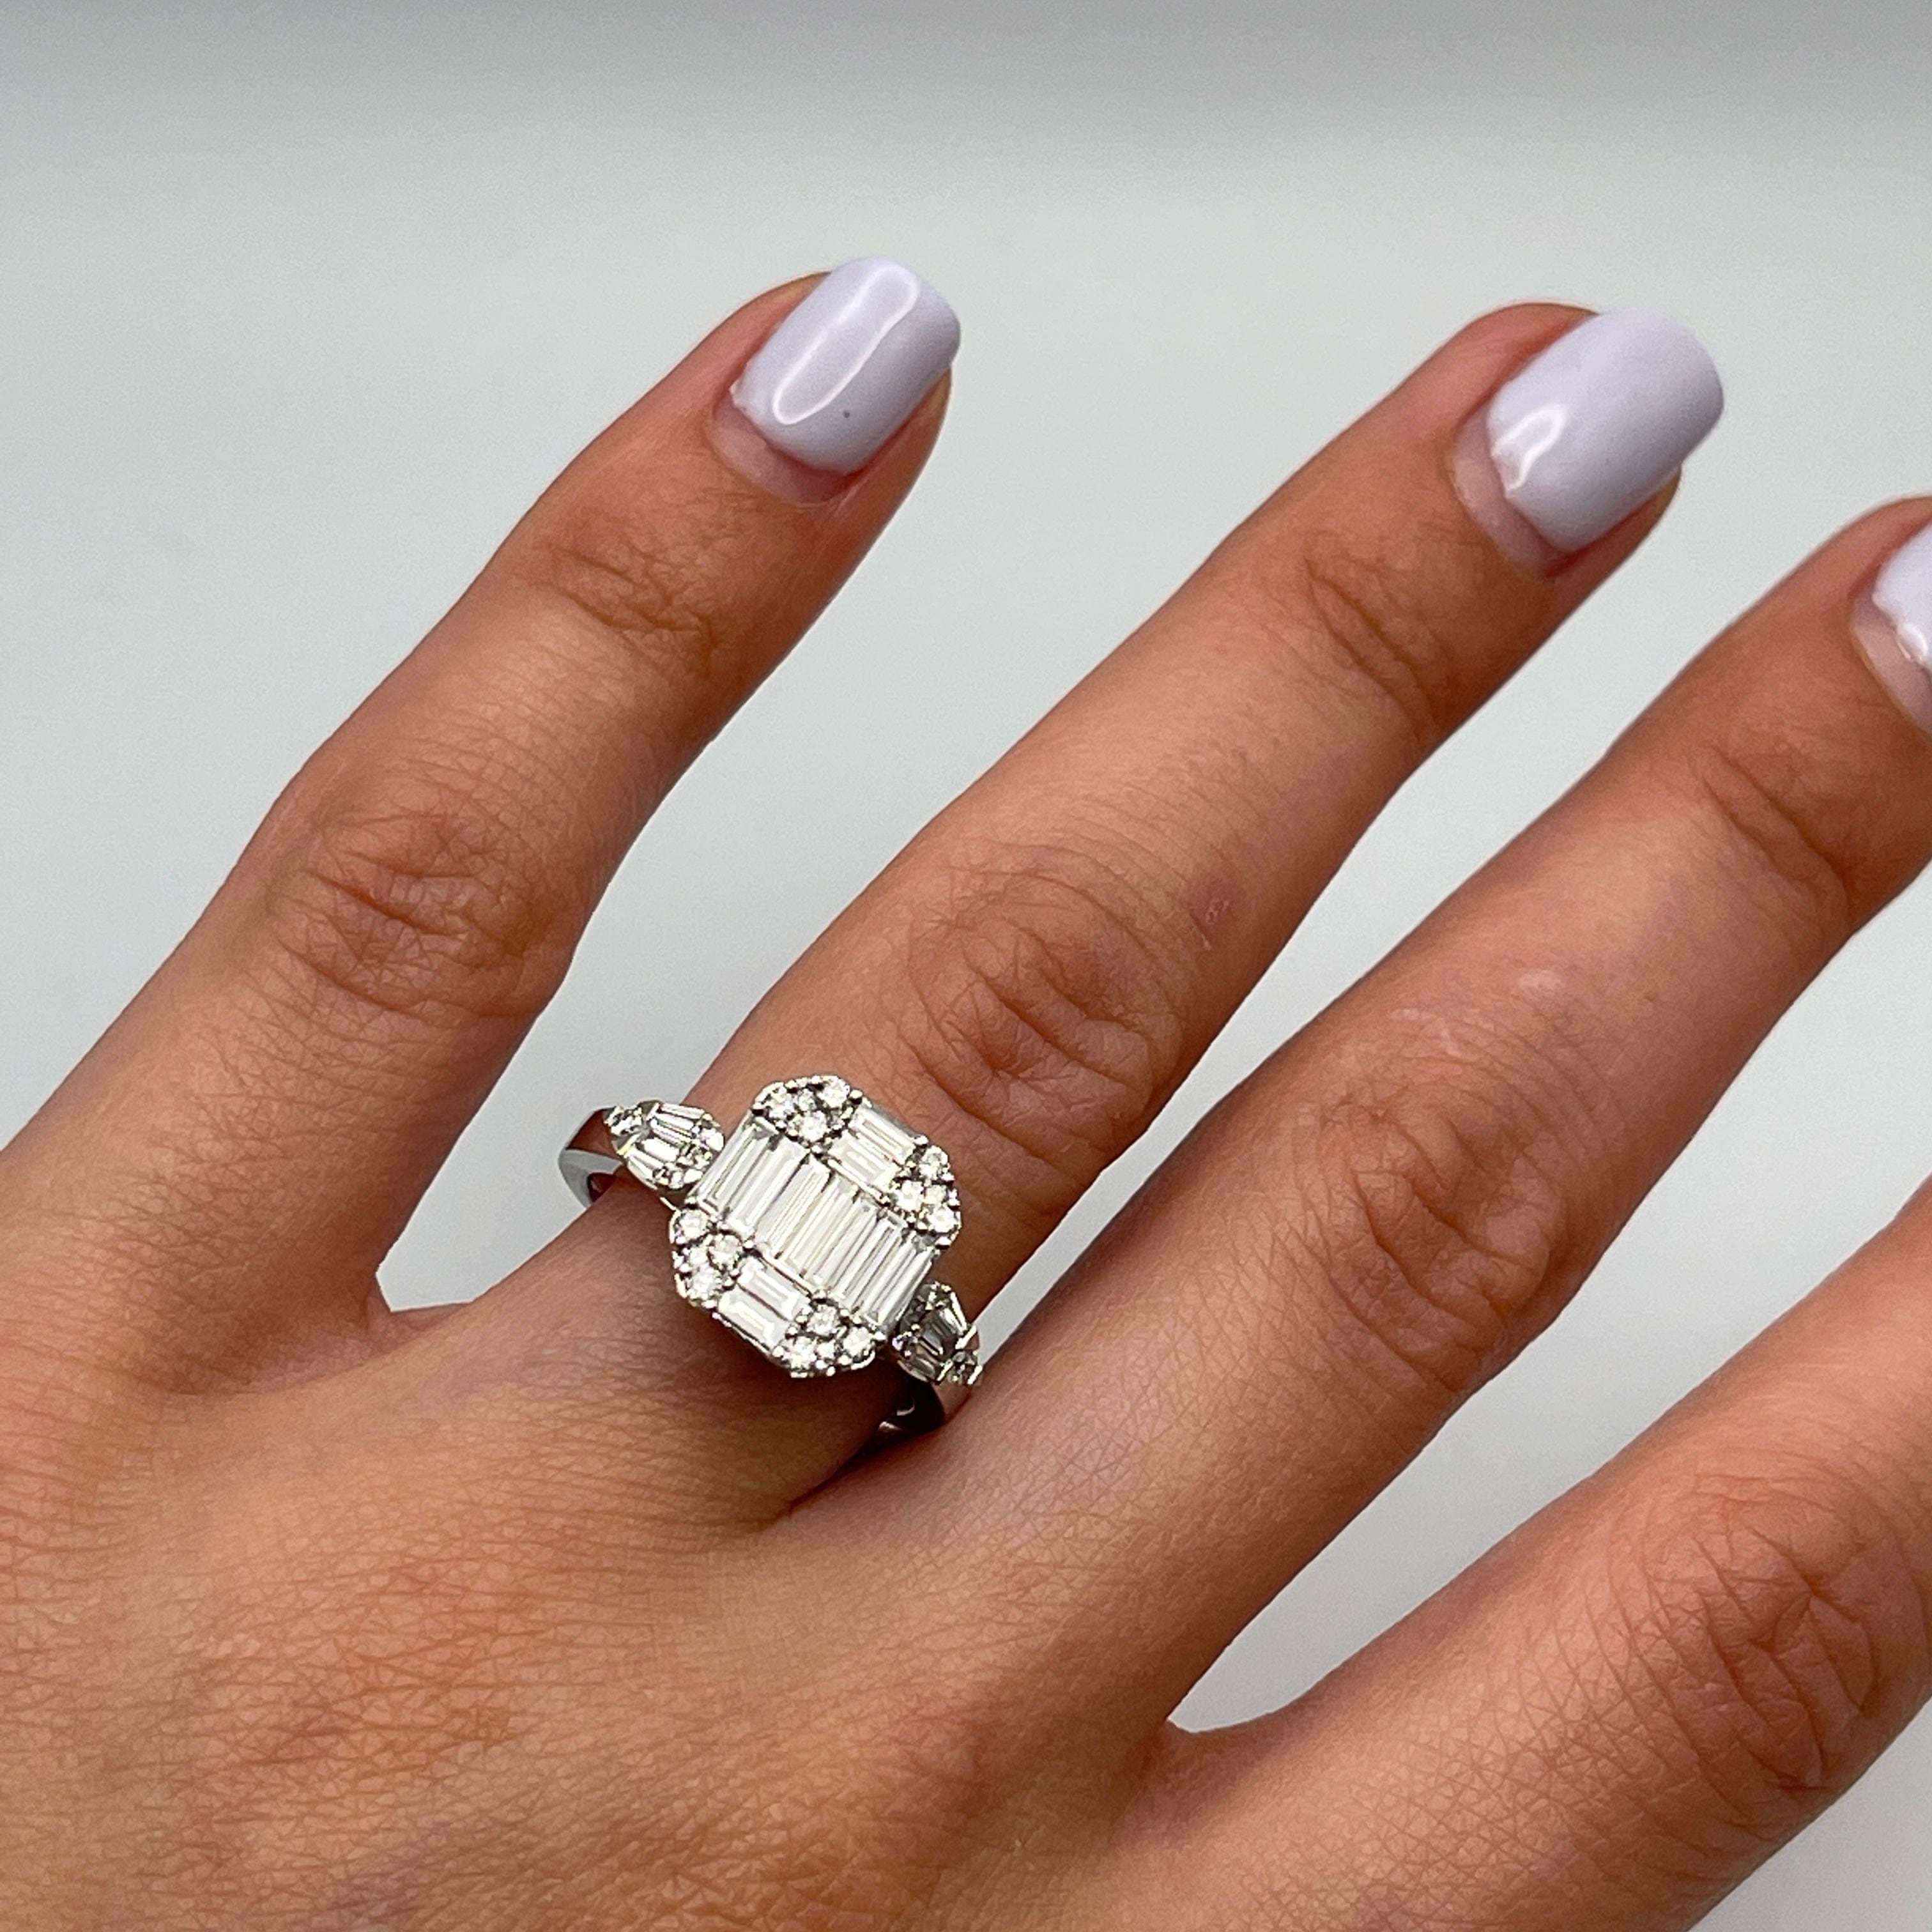 The Queen Diamond Ring